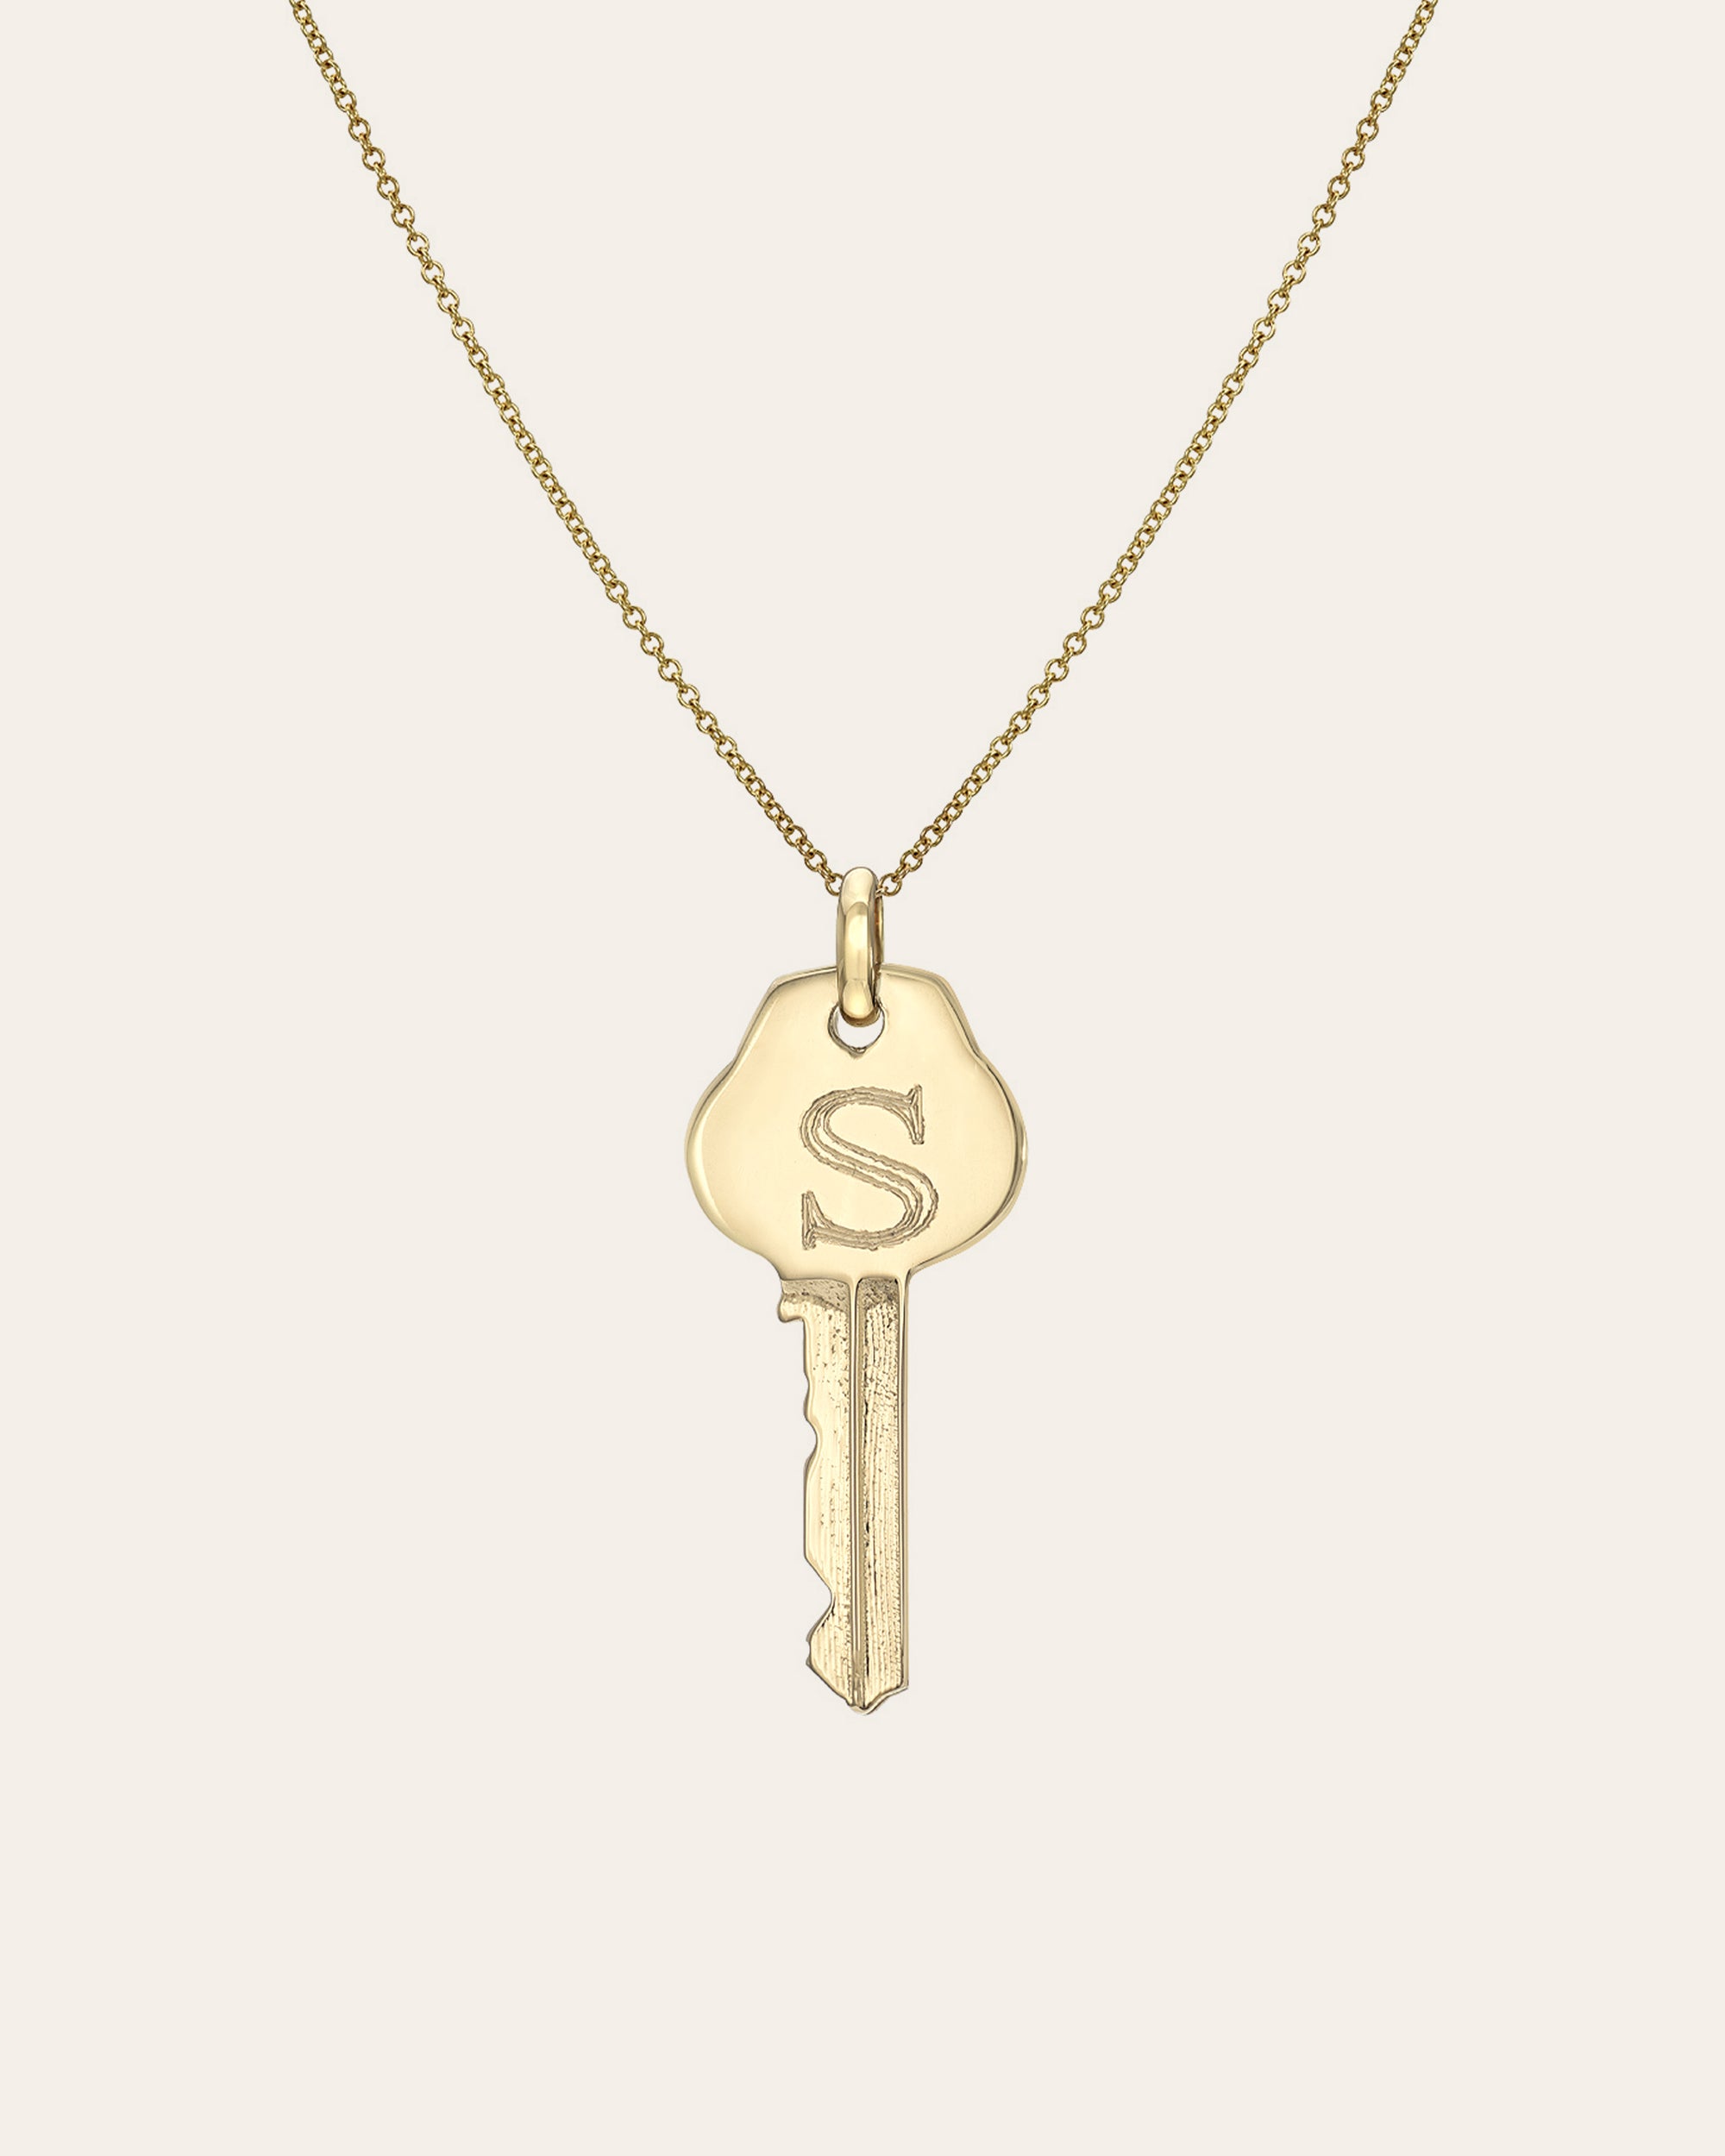 14K Gold Lock Necklace 14 - 16 Adjustable (Choker Length) +$10